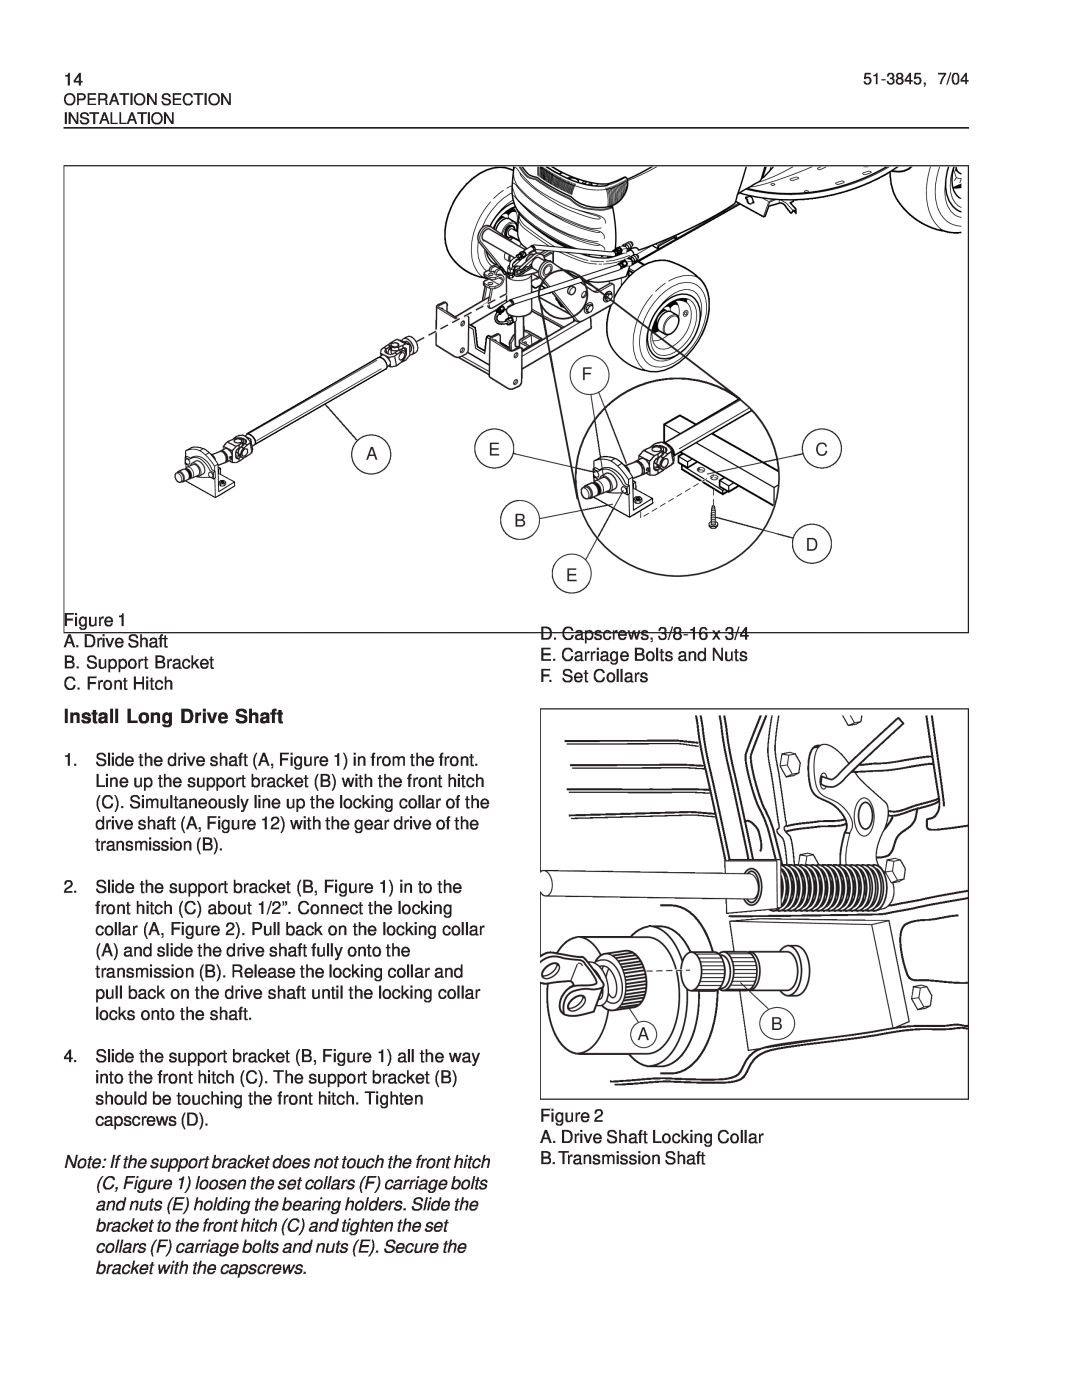 Snapper M26 Series, 151-3845 manual Install Long Drive Shaft 